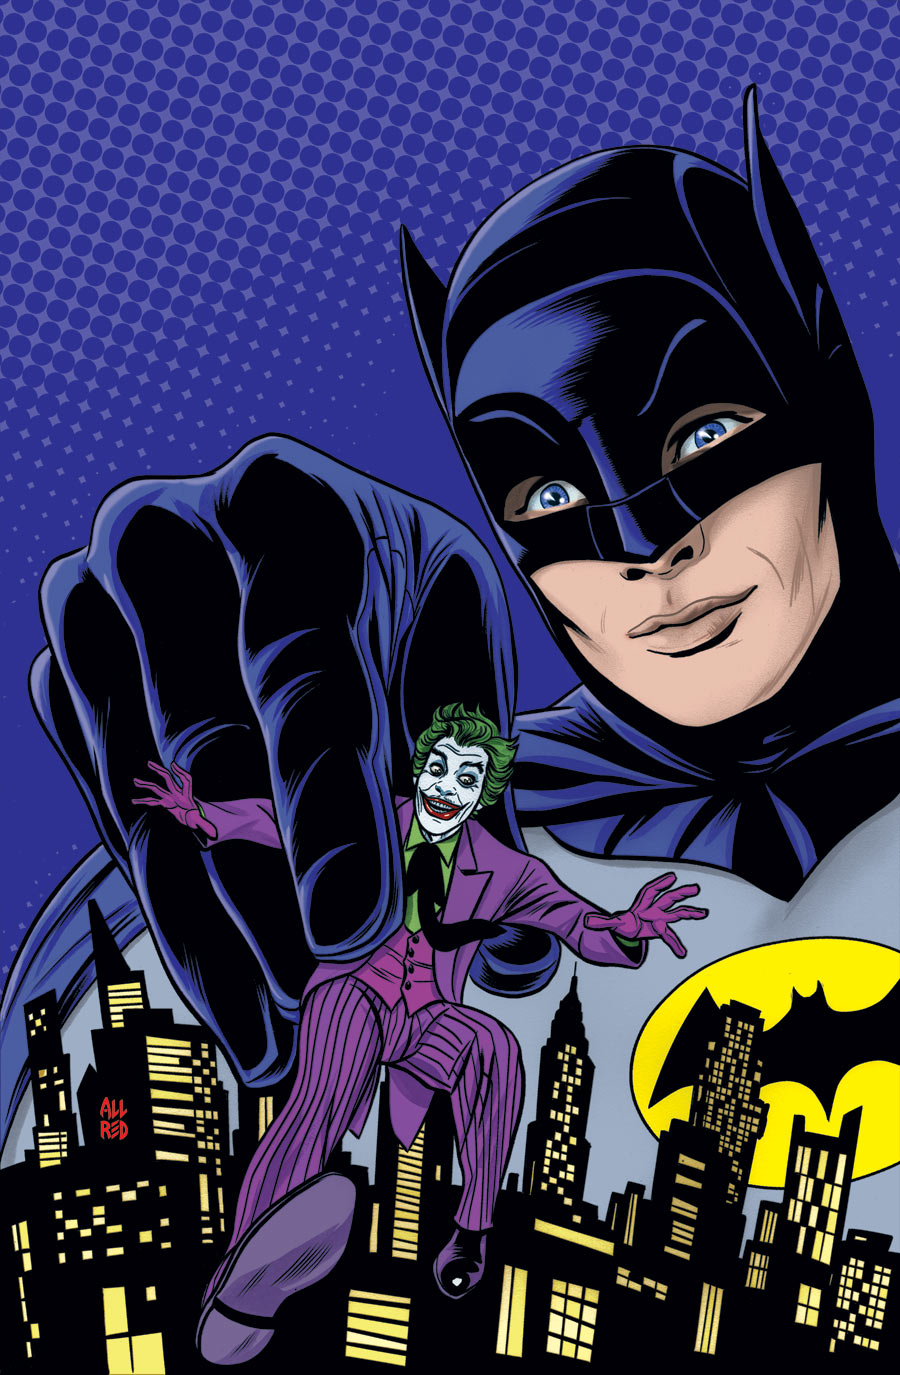 Adam West, Burt Ward, and Julie Newmar reunite for a new animated Batman  film